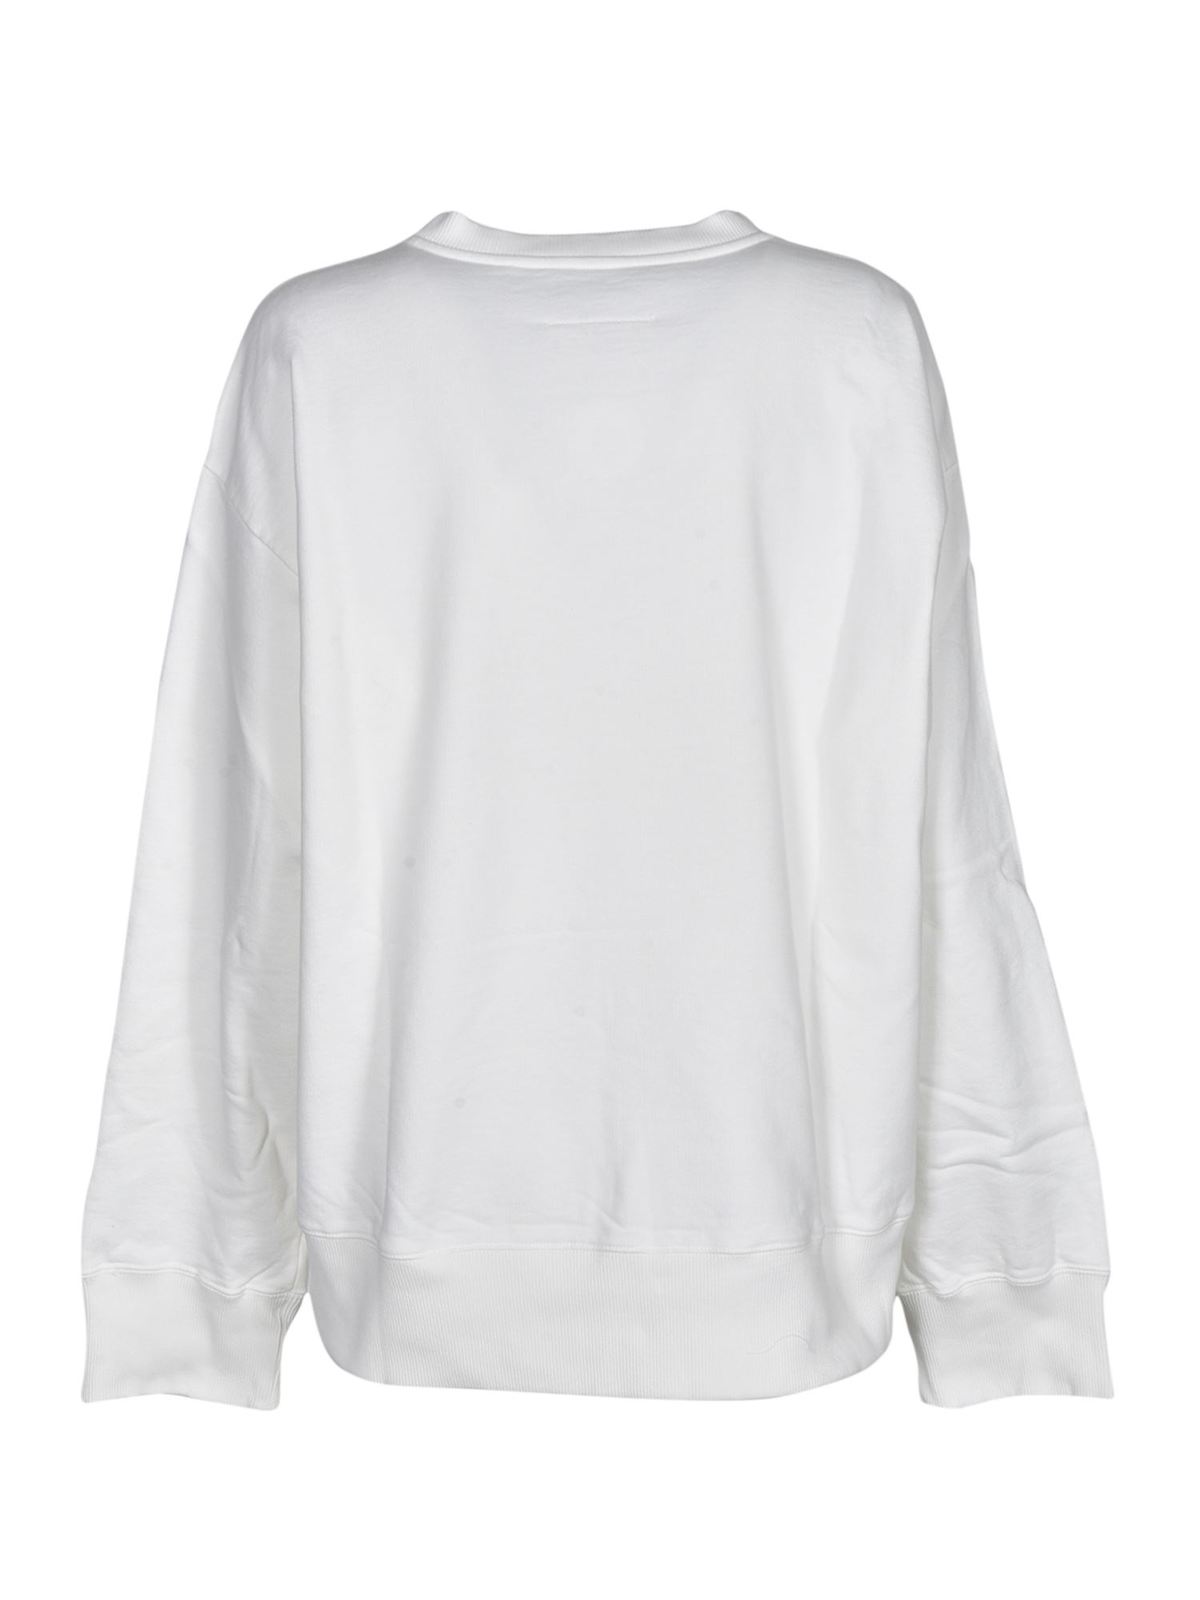 MM6 Maison Margiela - Embossed logo sweatshirt in white - Sweatshirts ...